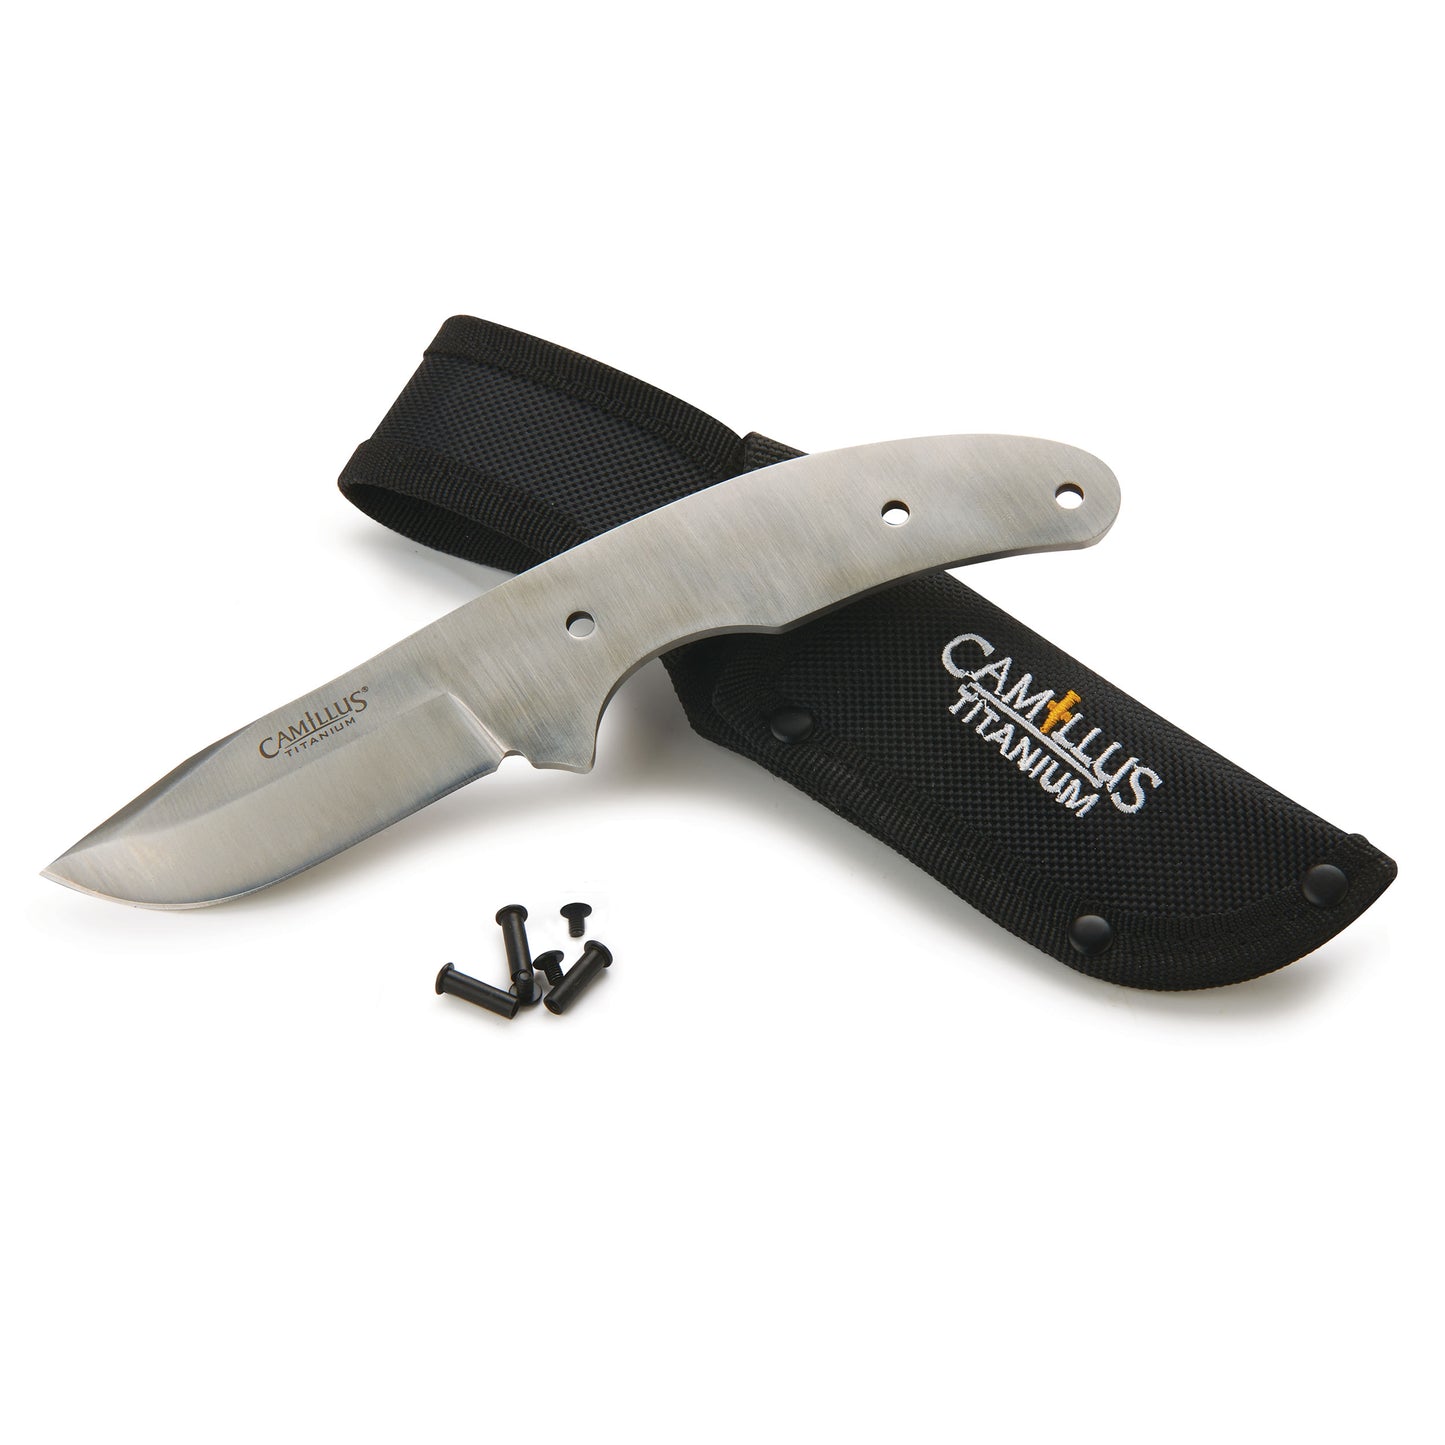 Camillus BALKUS Fixed Blade Knife Kit alt 1